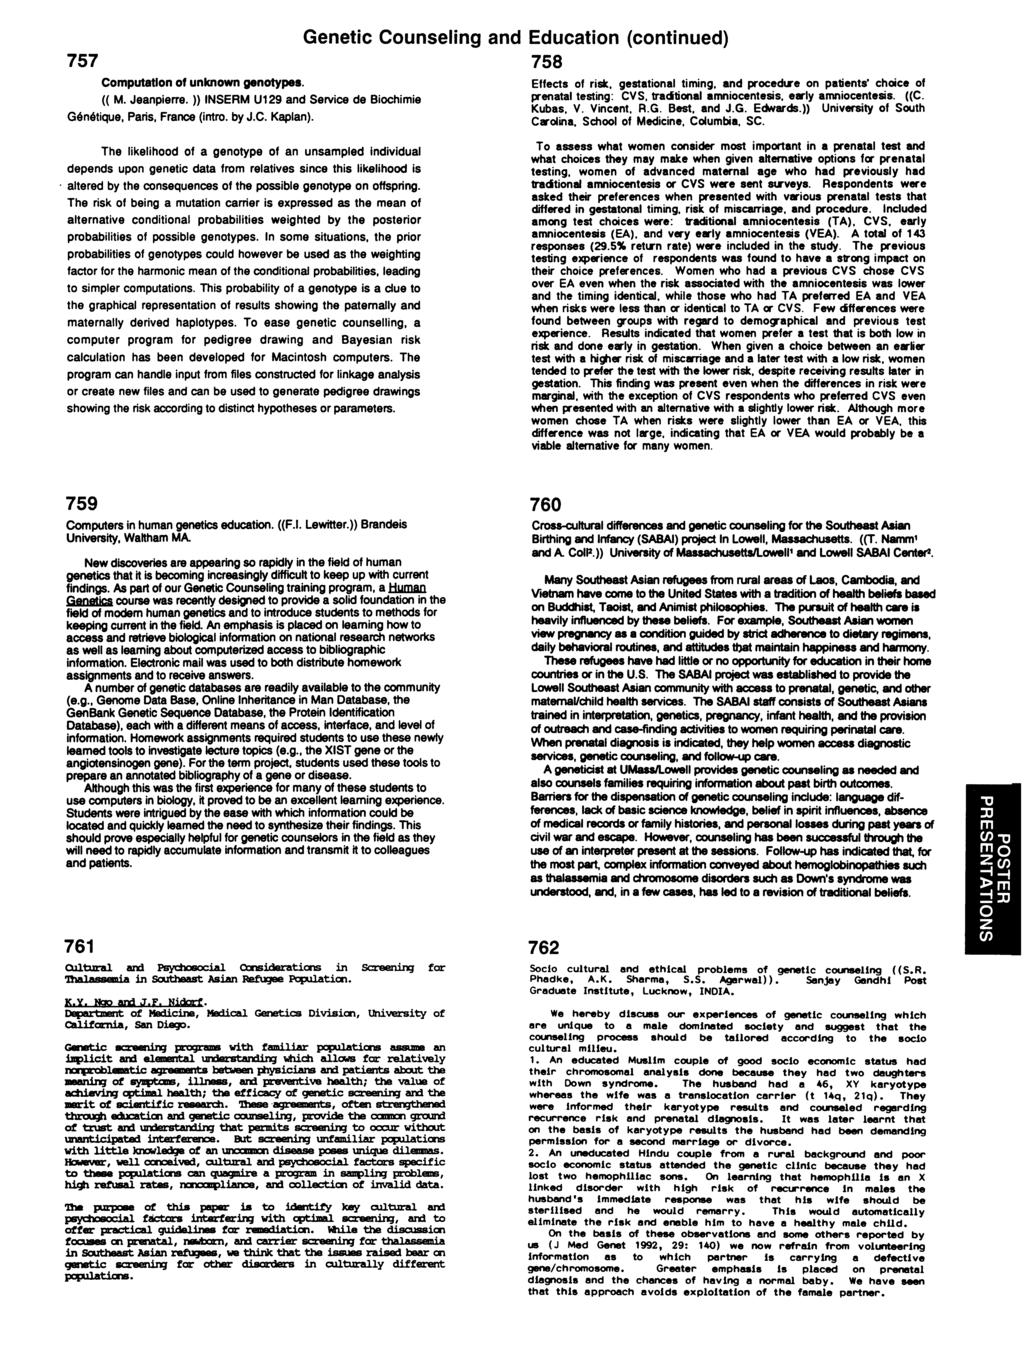 757 Computation of unknown genotypes. (( M. Jeanpierre. )) INSERM U129 and Service de Blochimie (3ndtique, Paris, France (intro. by J.C. Kaplan).